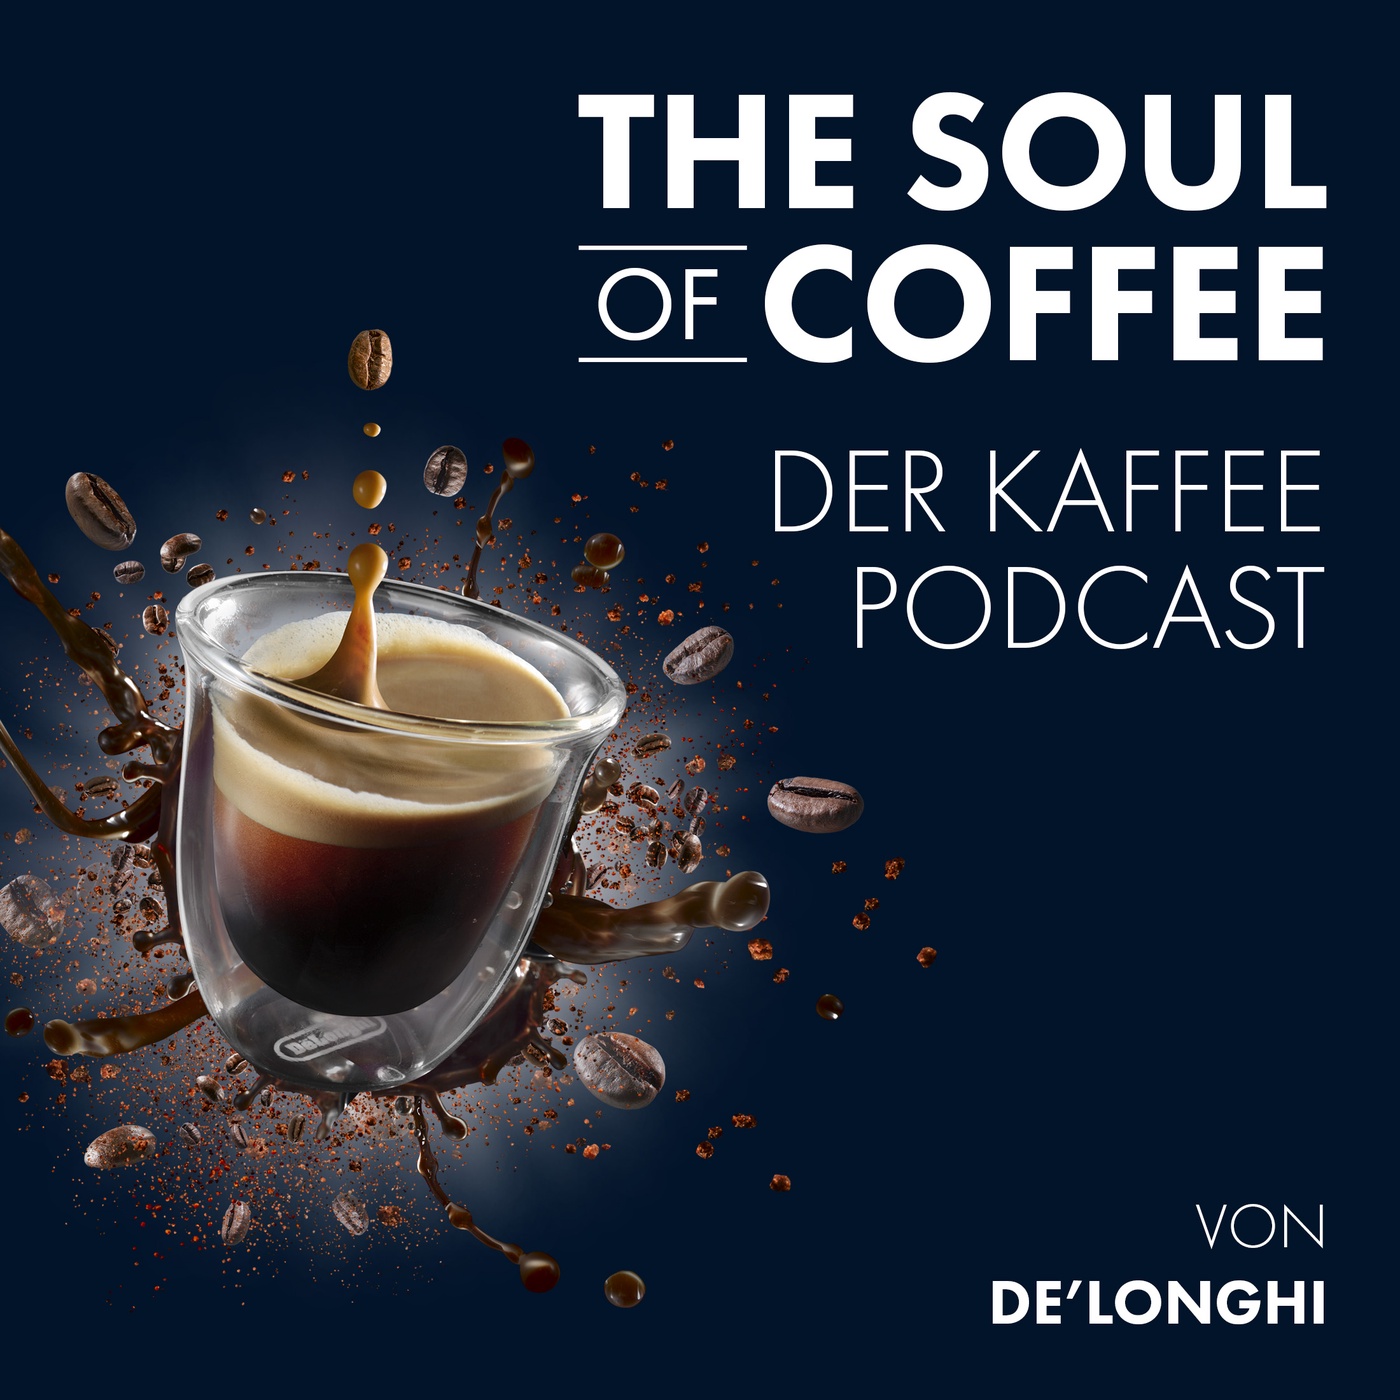 The Soul of Coffee – der Kaffee-Podcast von De’Longhi